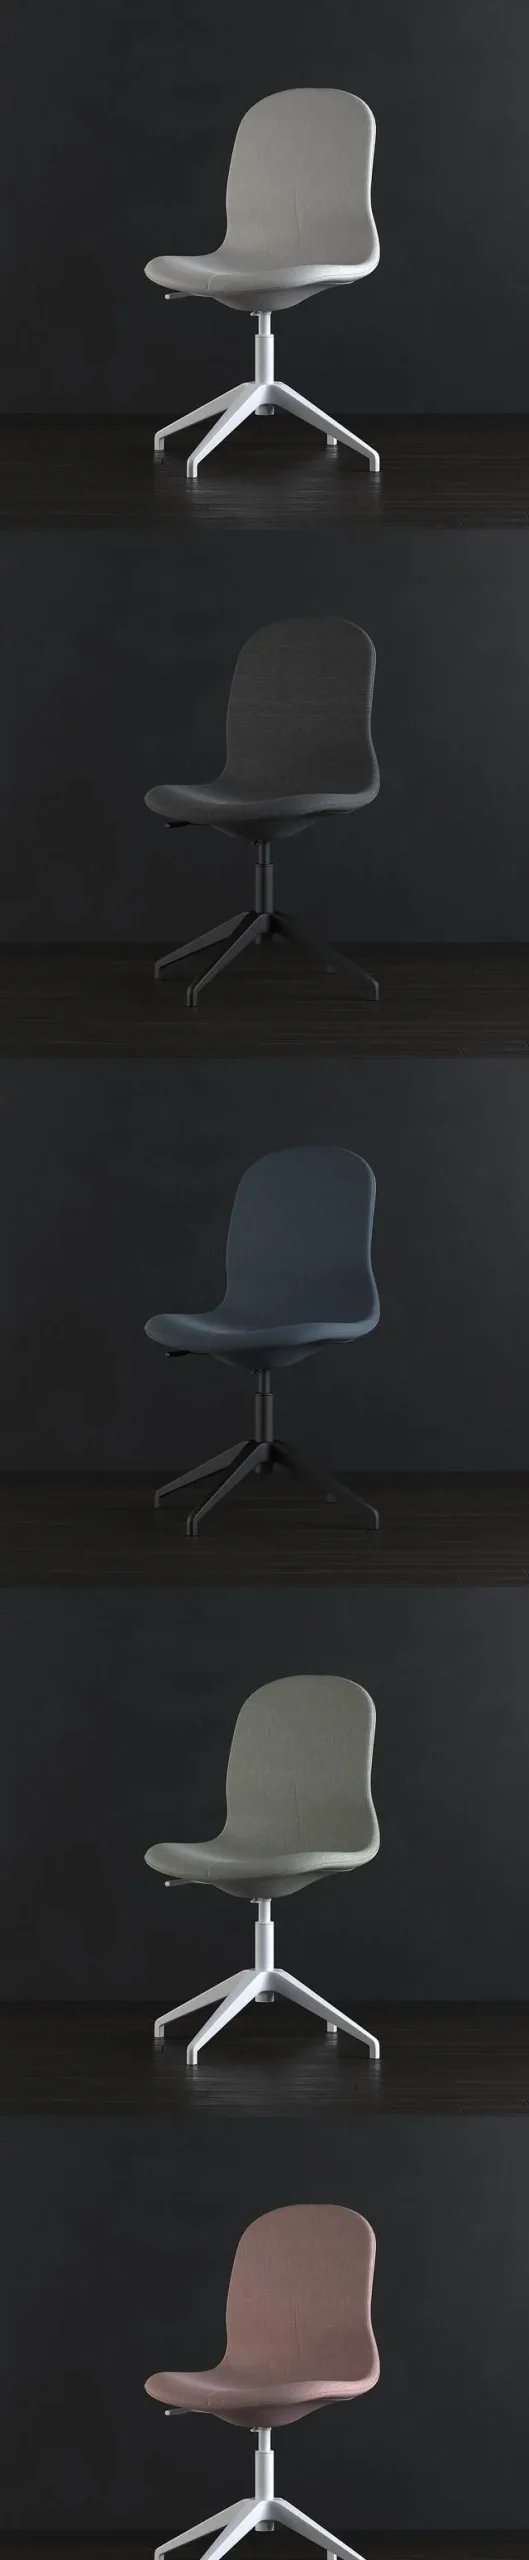 3dsky - Ikea LANGFJALL chair 02